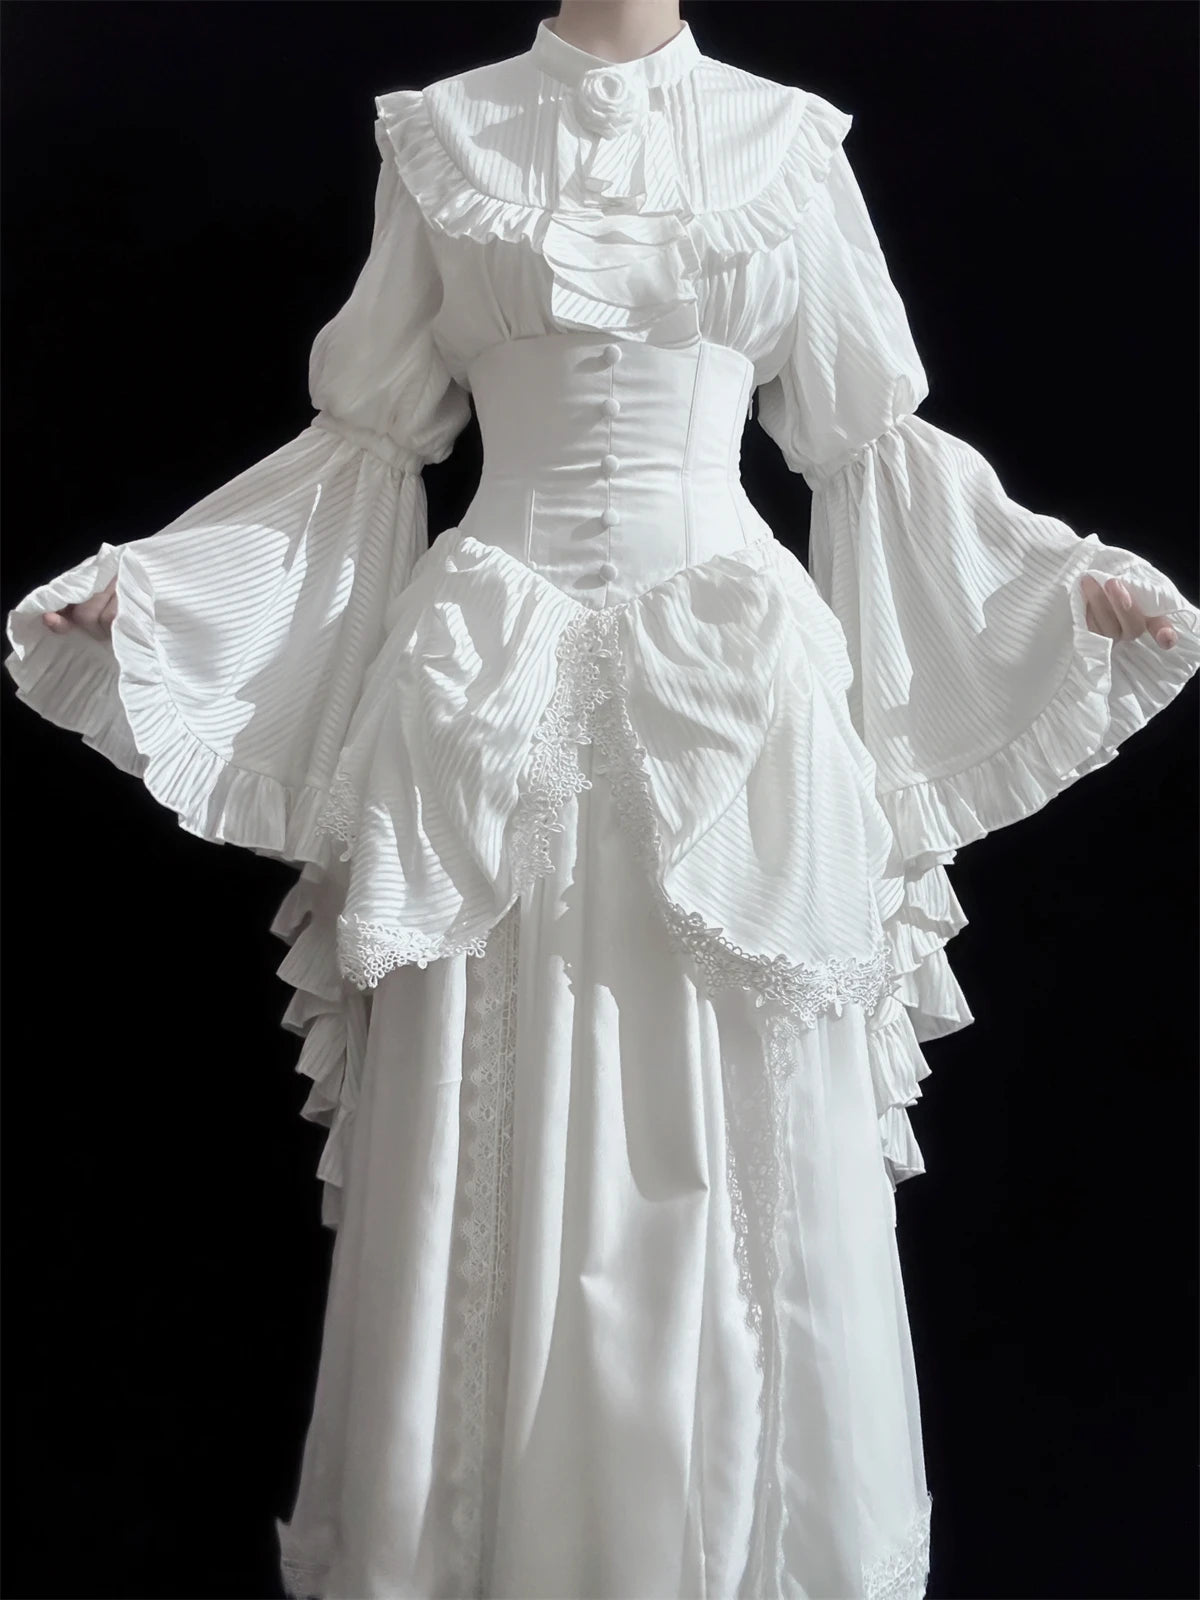 Dark Gothic Style Lolita Wear Matching Skirt Shirt Nun Style Suit Women's Black/White